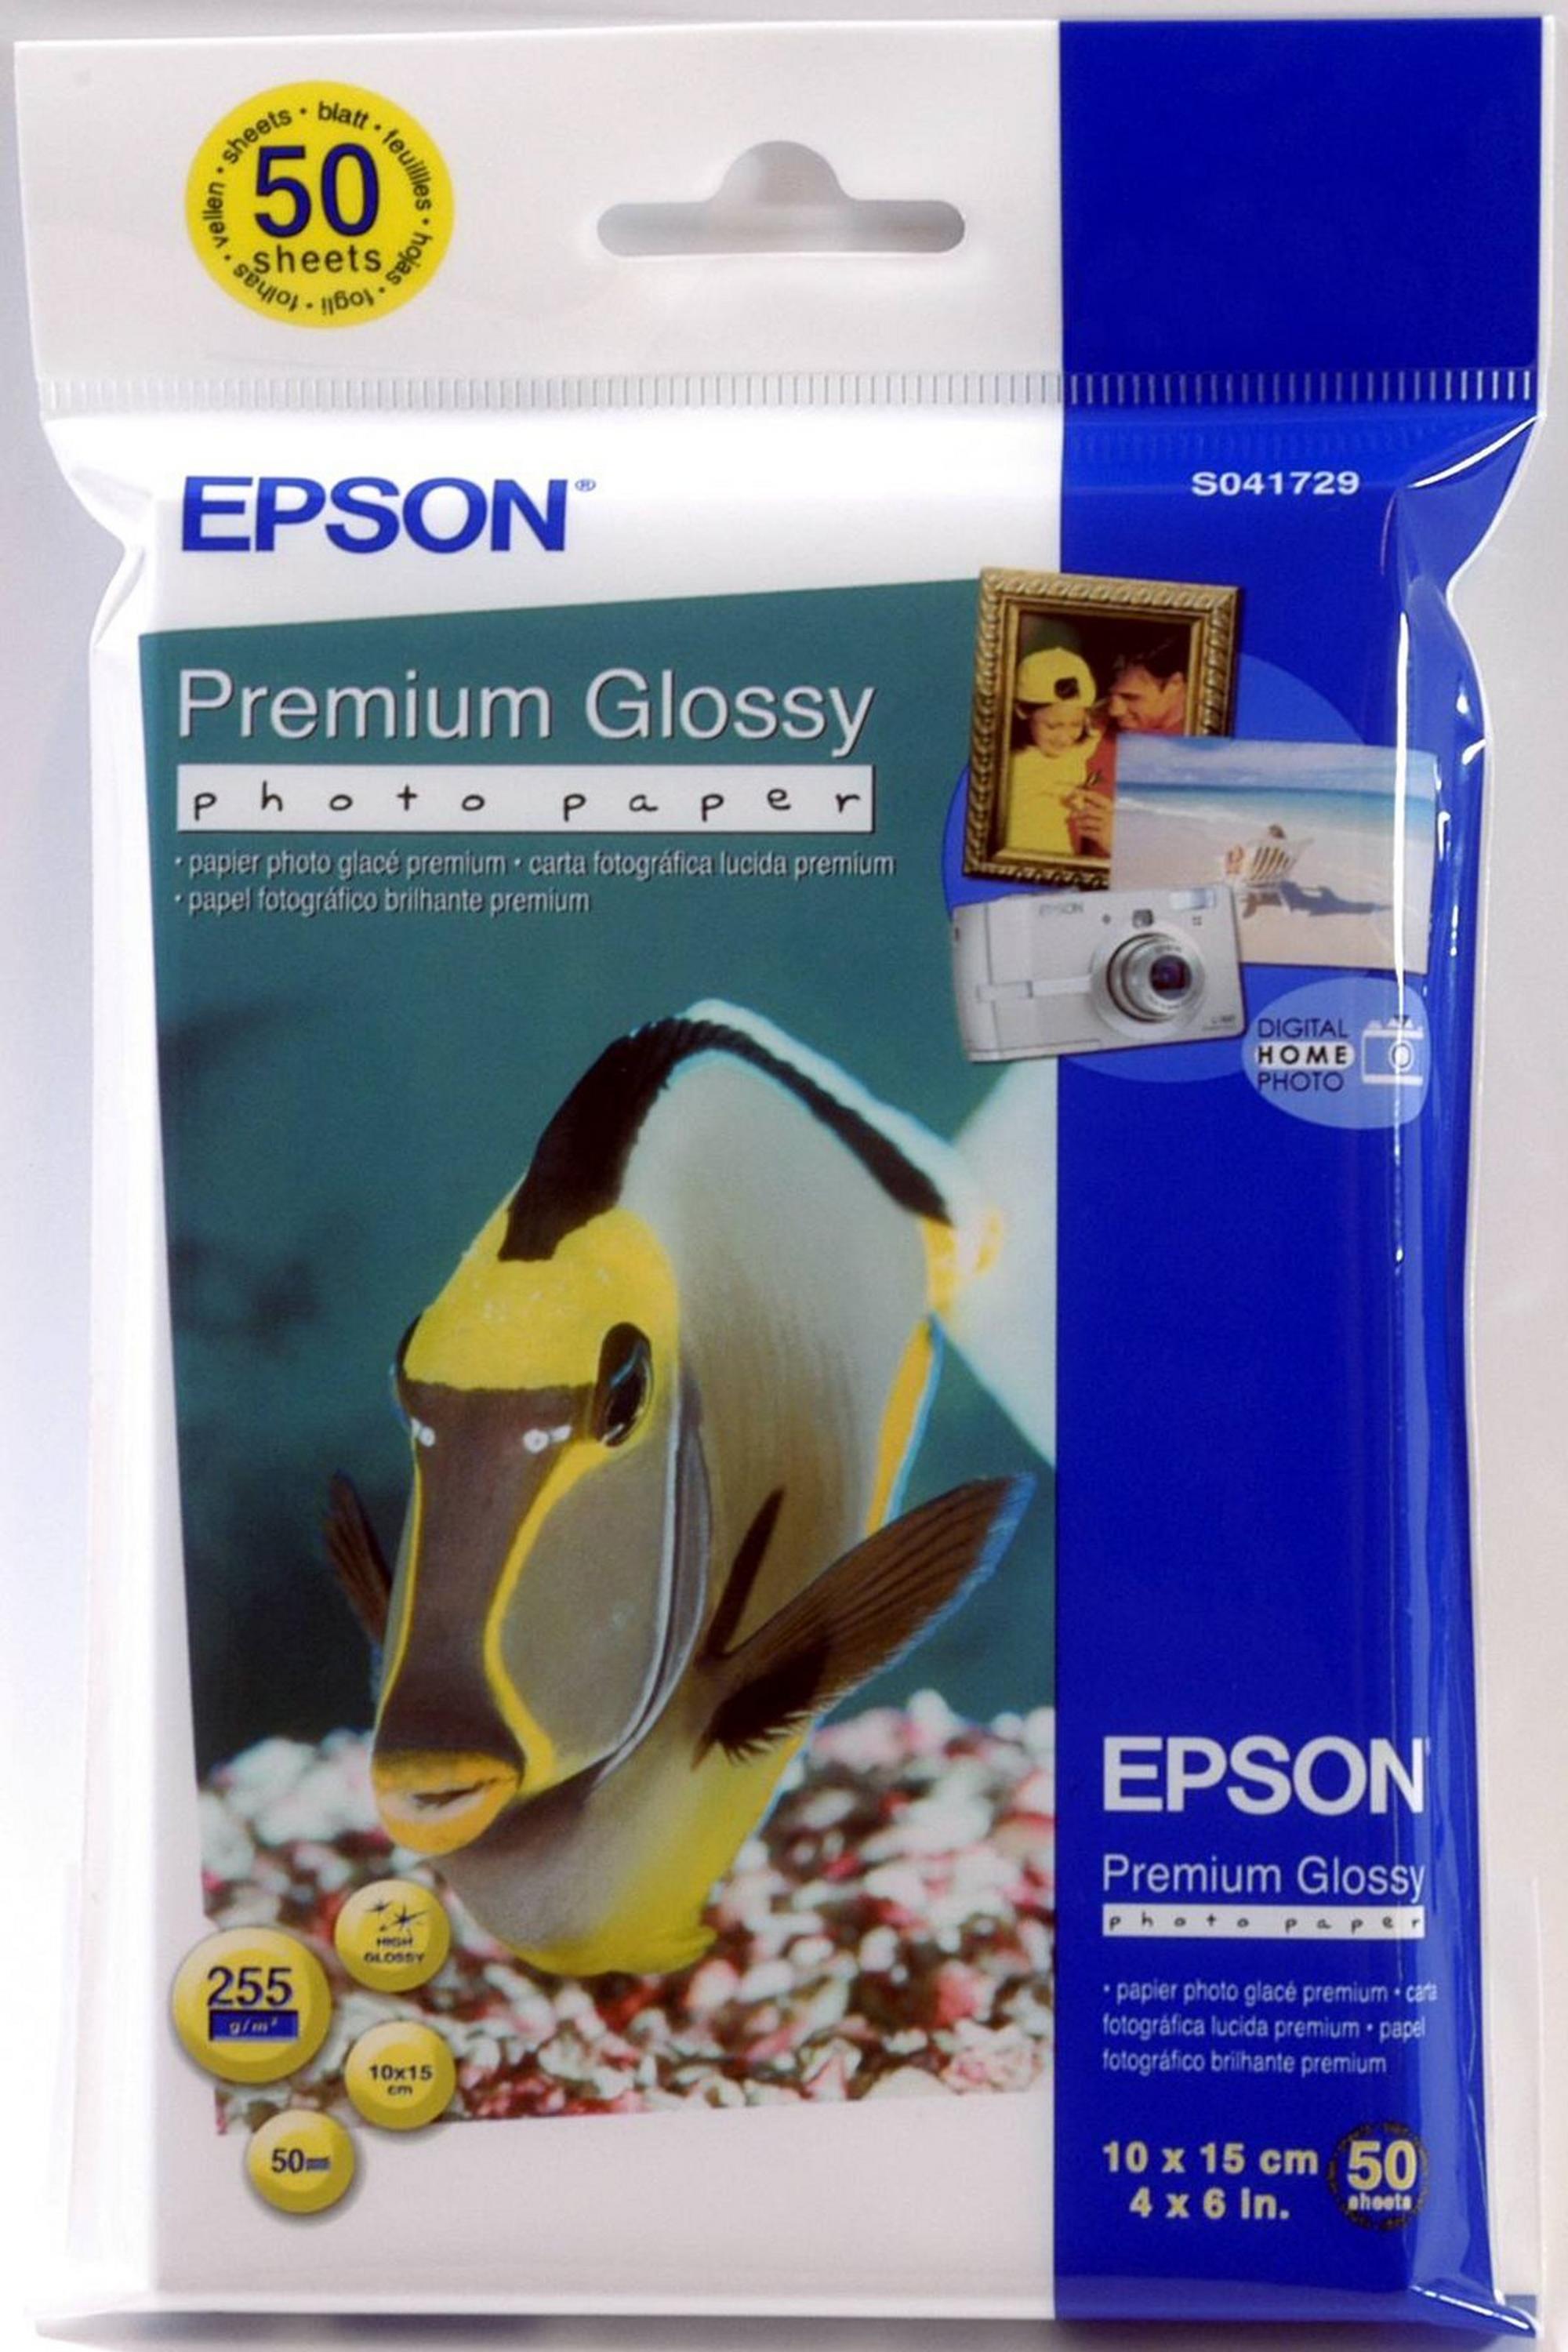 Epson Premium Glossy Photo Paper - 10x15cm, 255g/m² - 50 sheets